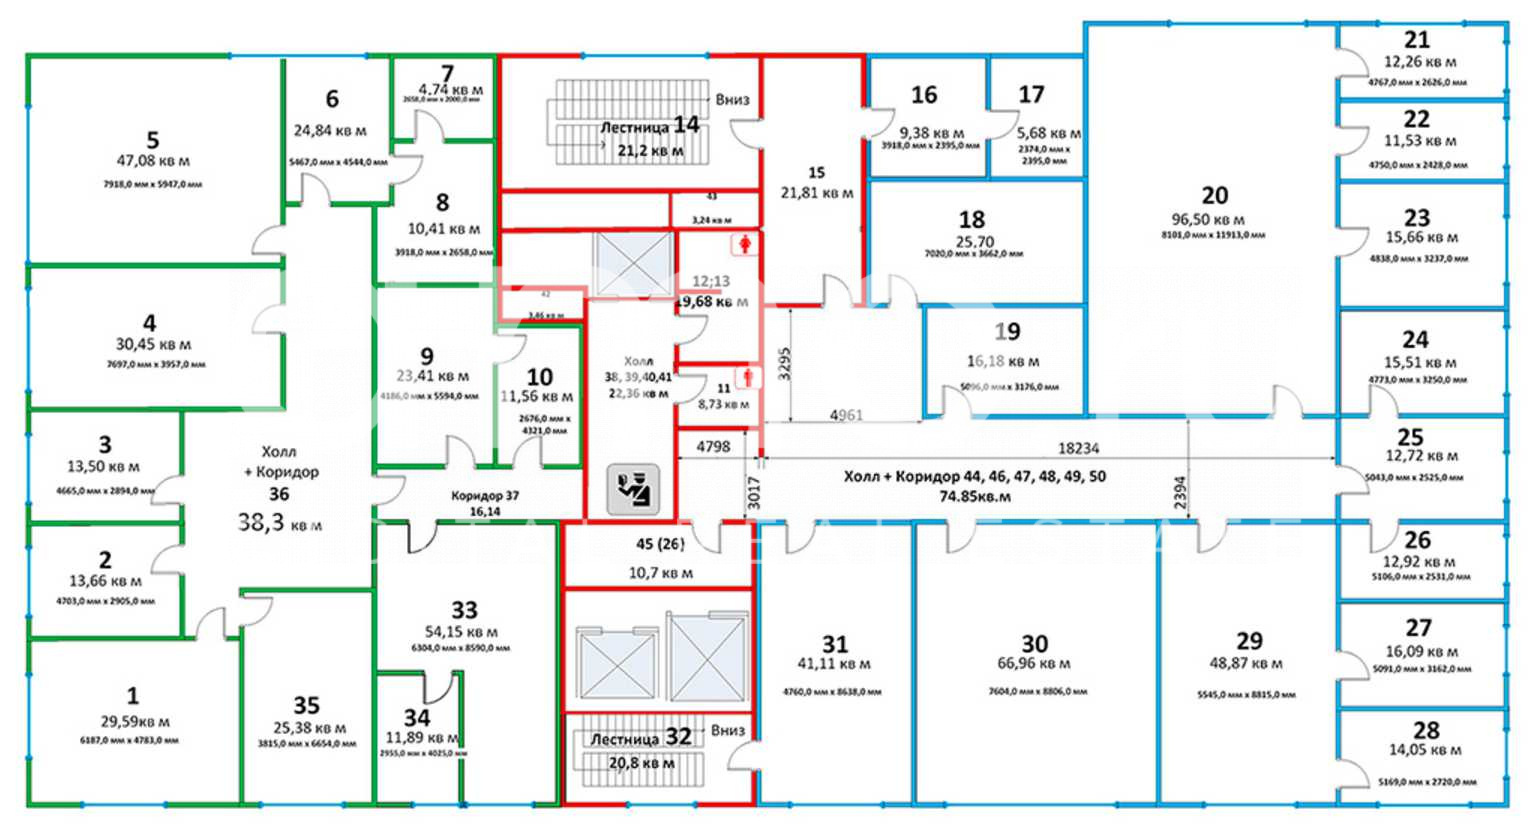 На каком этаже находится квартира 38. План авиапарка 4 этаж. Авиапарк план этажей. Авиапарк план 4 этажа. Карта авиапарка 4 этаж.